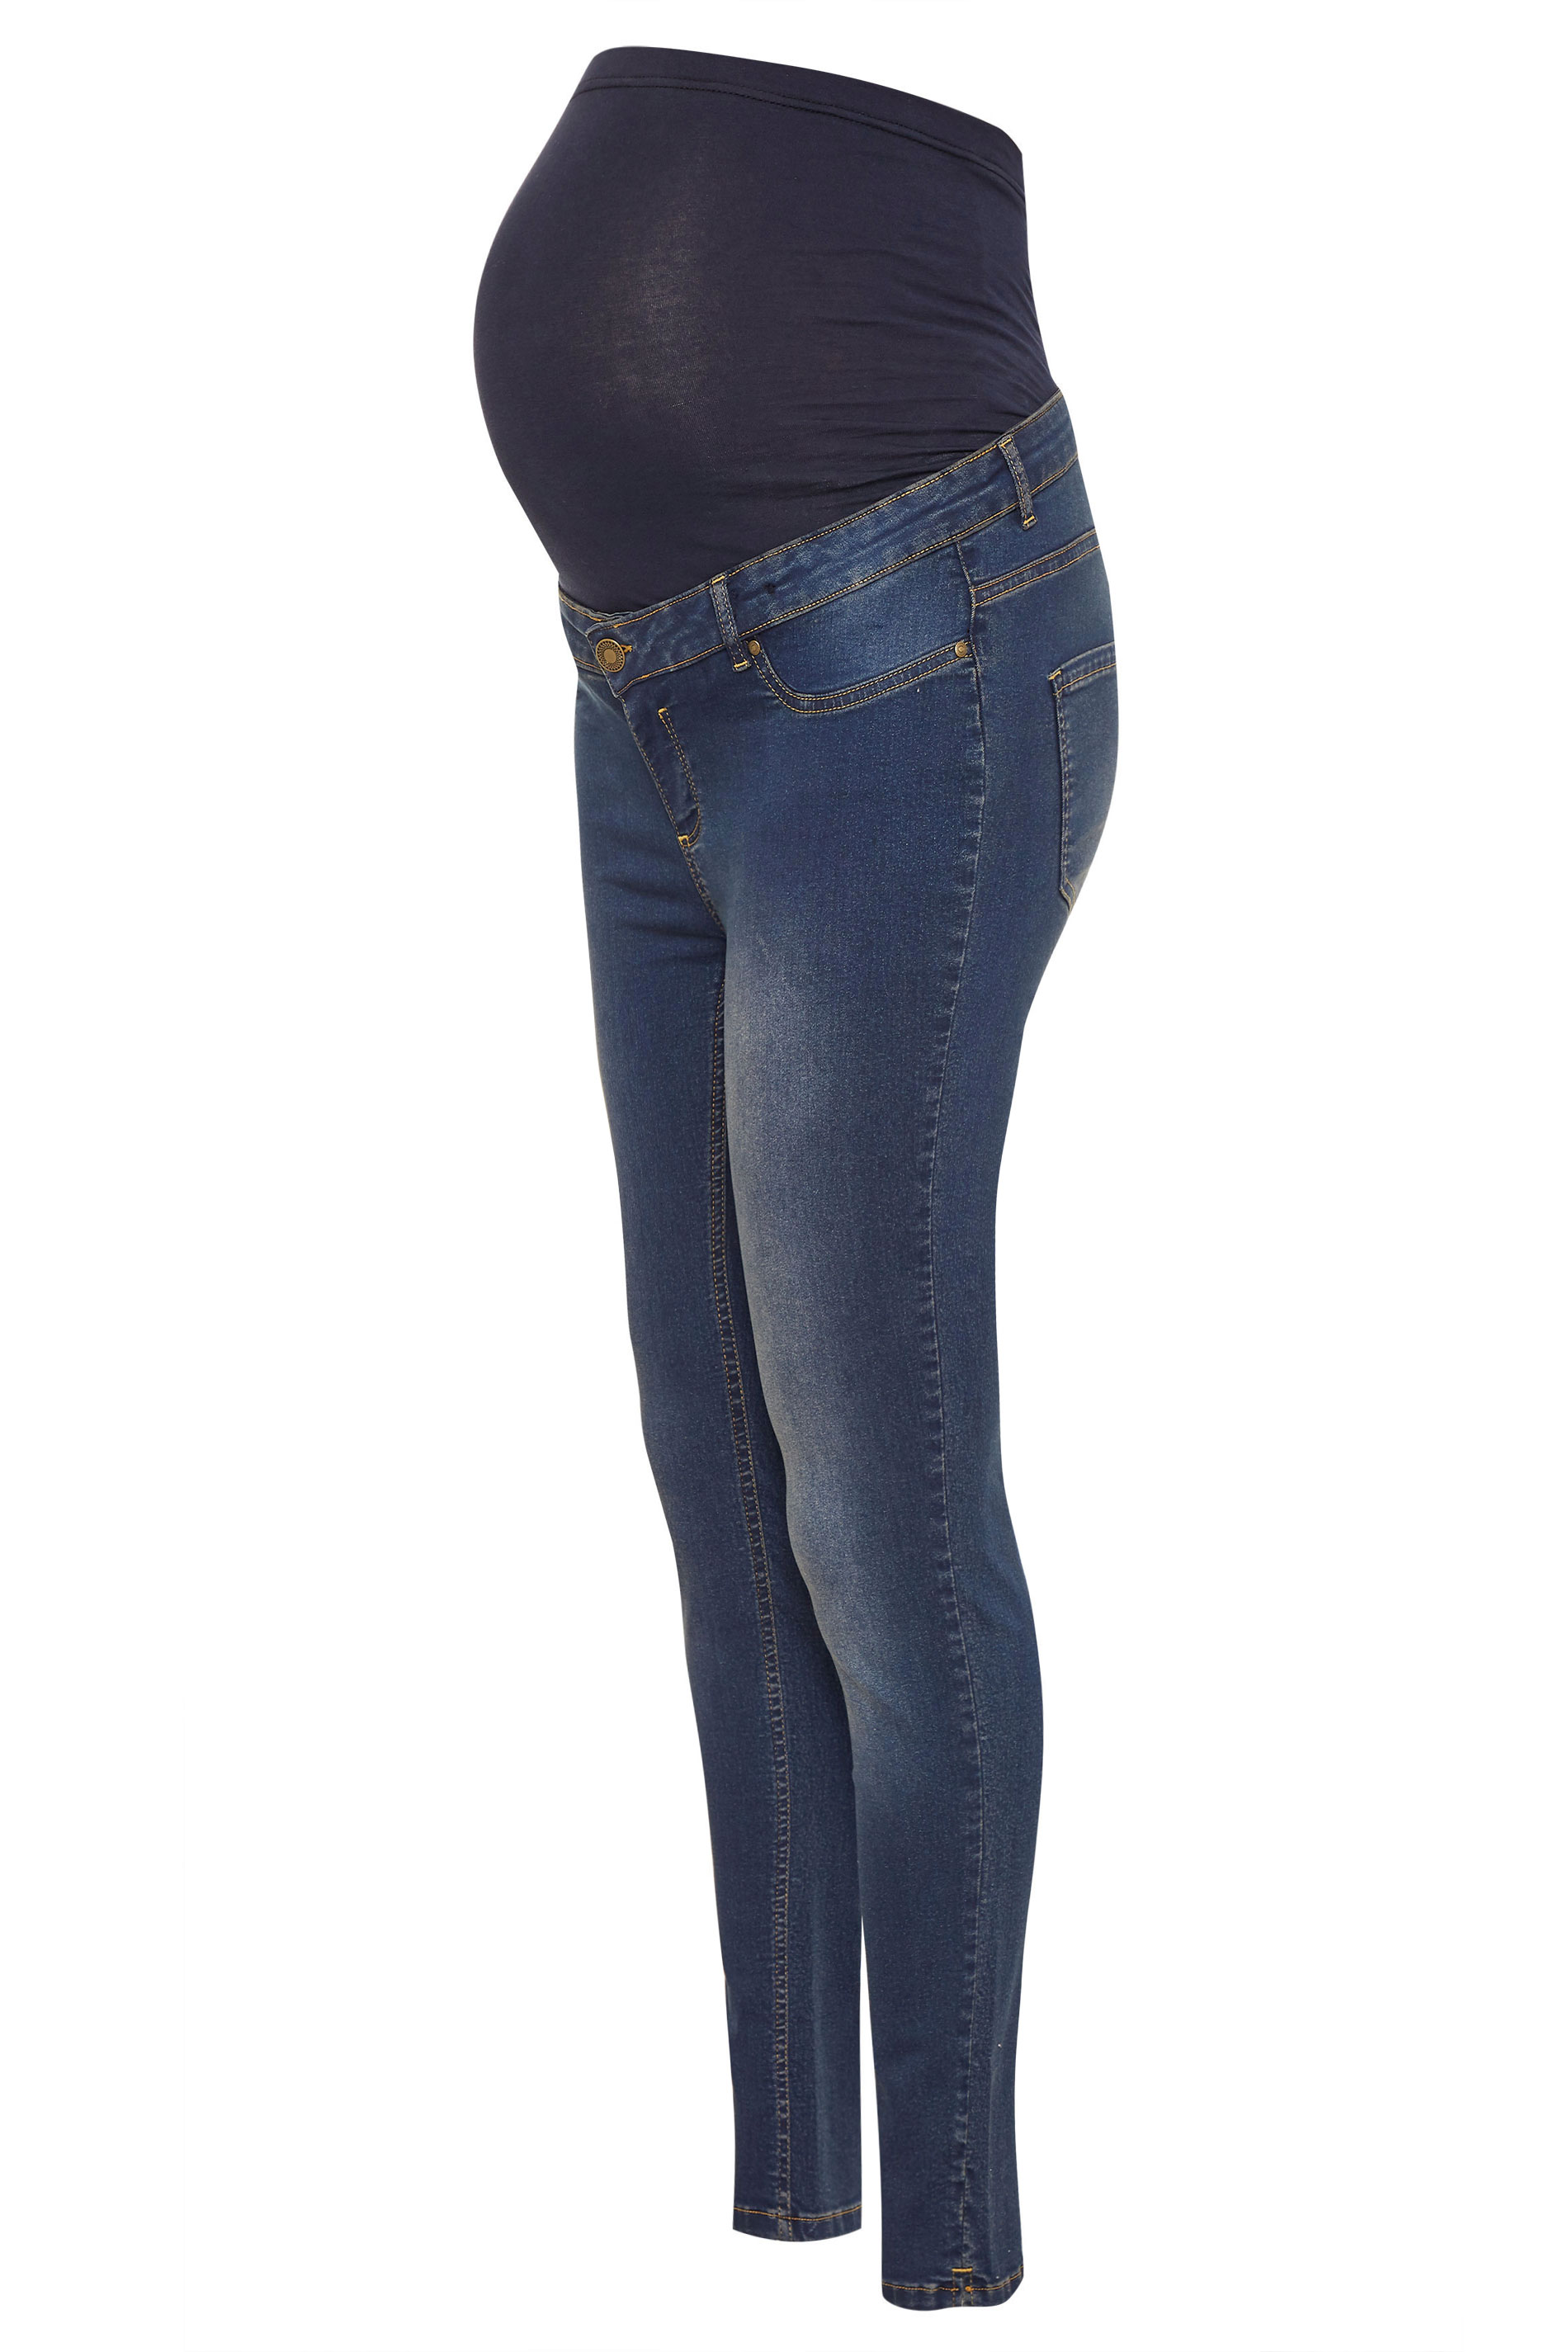 Tall Women's LTS Maternity Blue Skinny Jeans